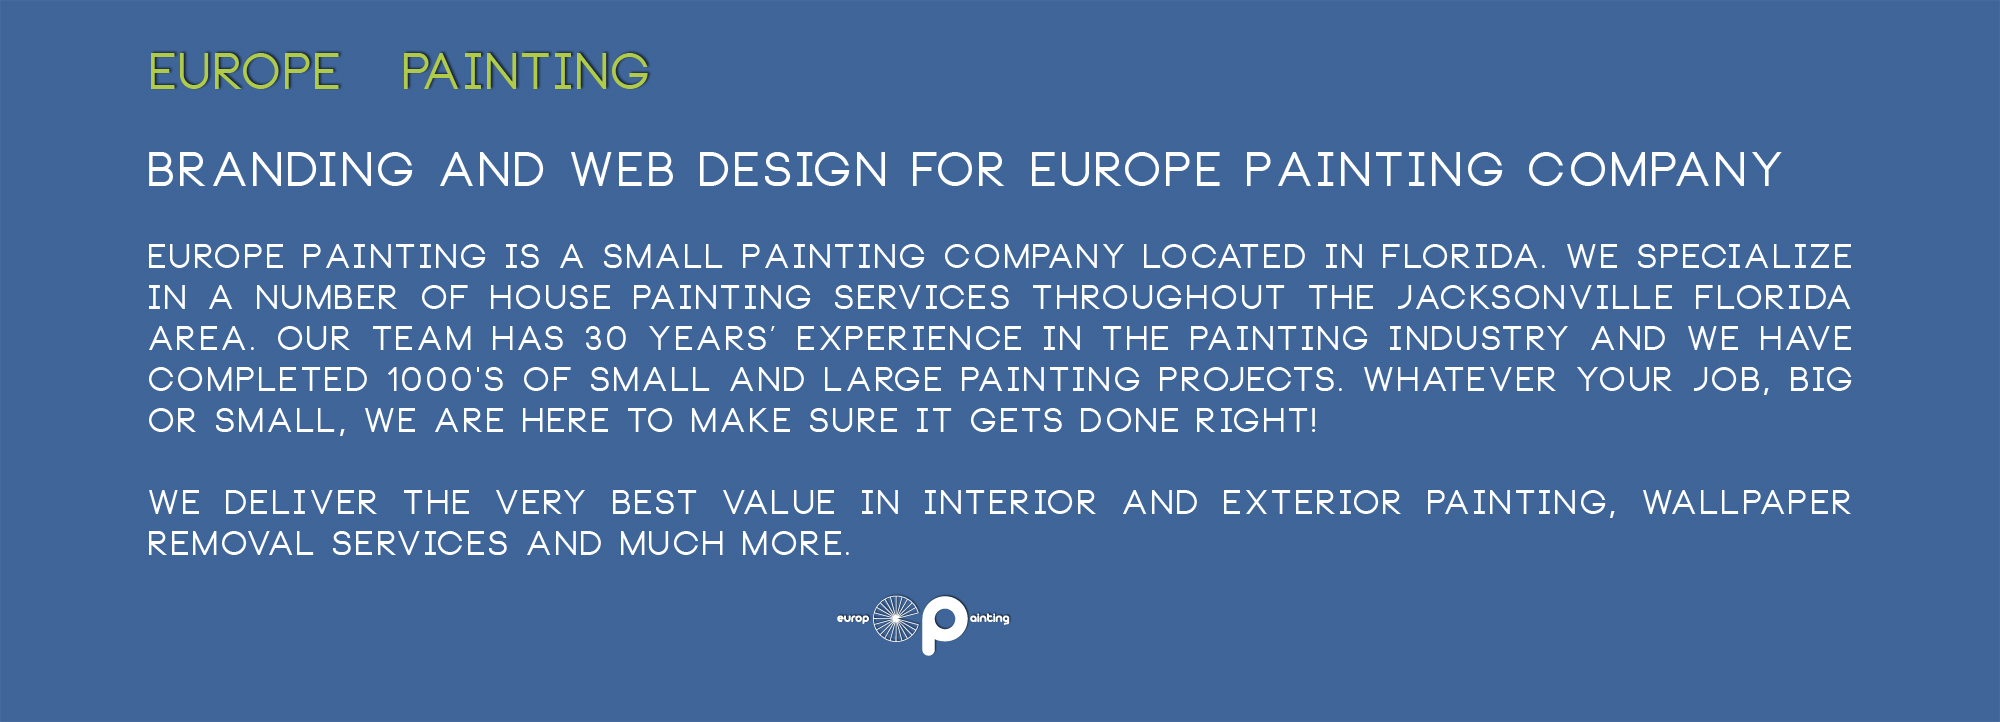 Europe Painting